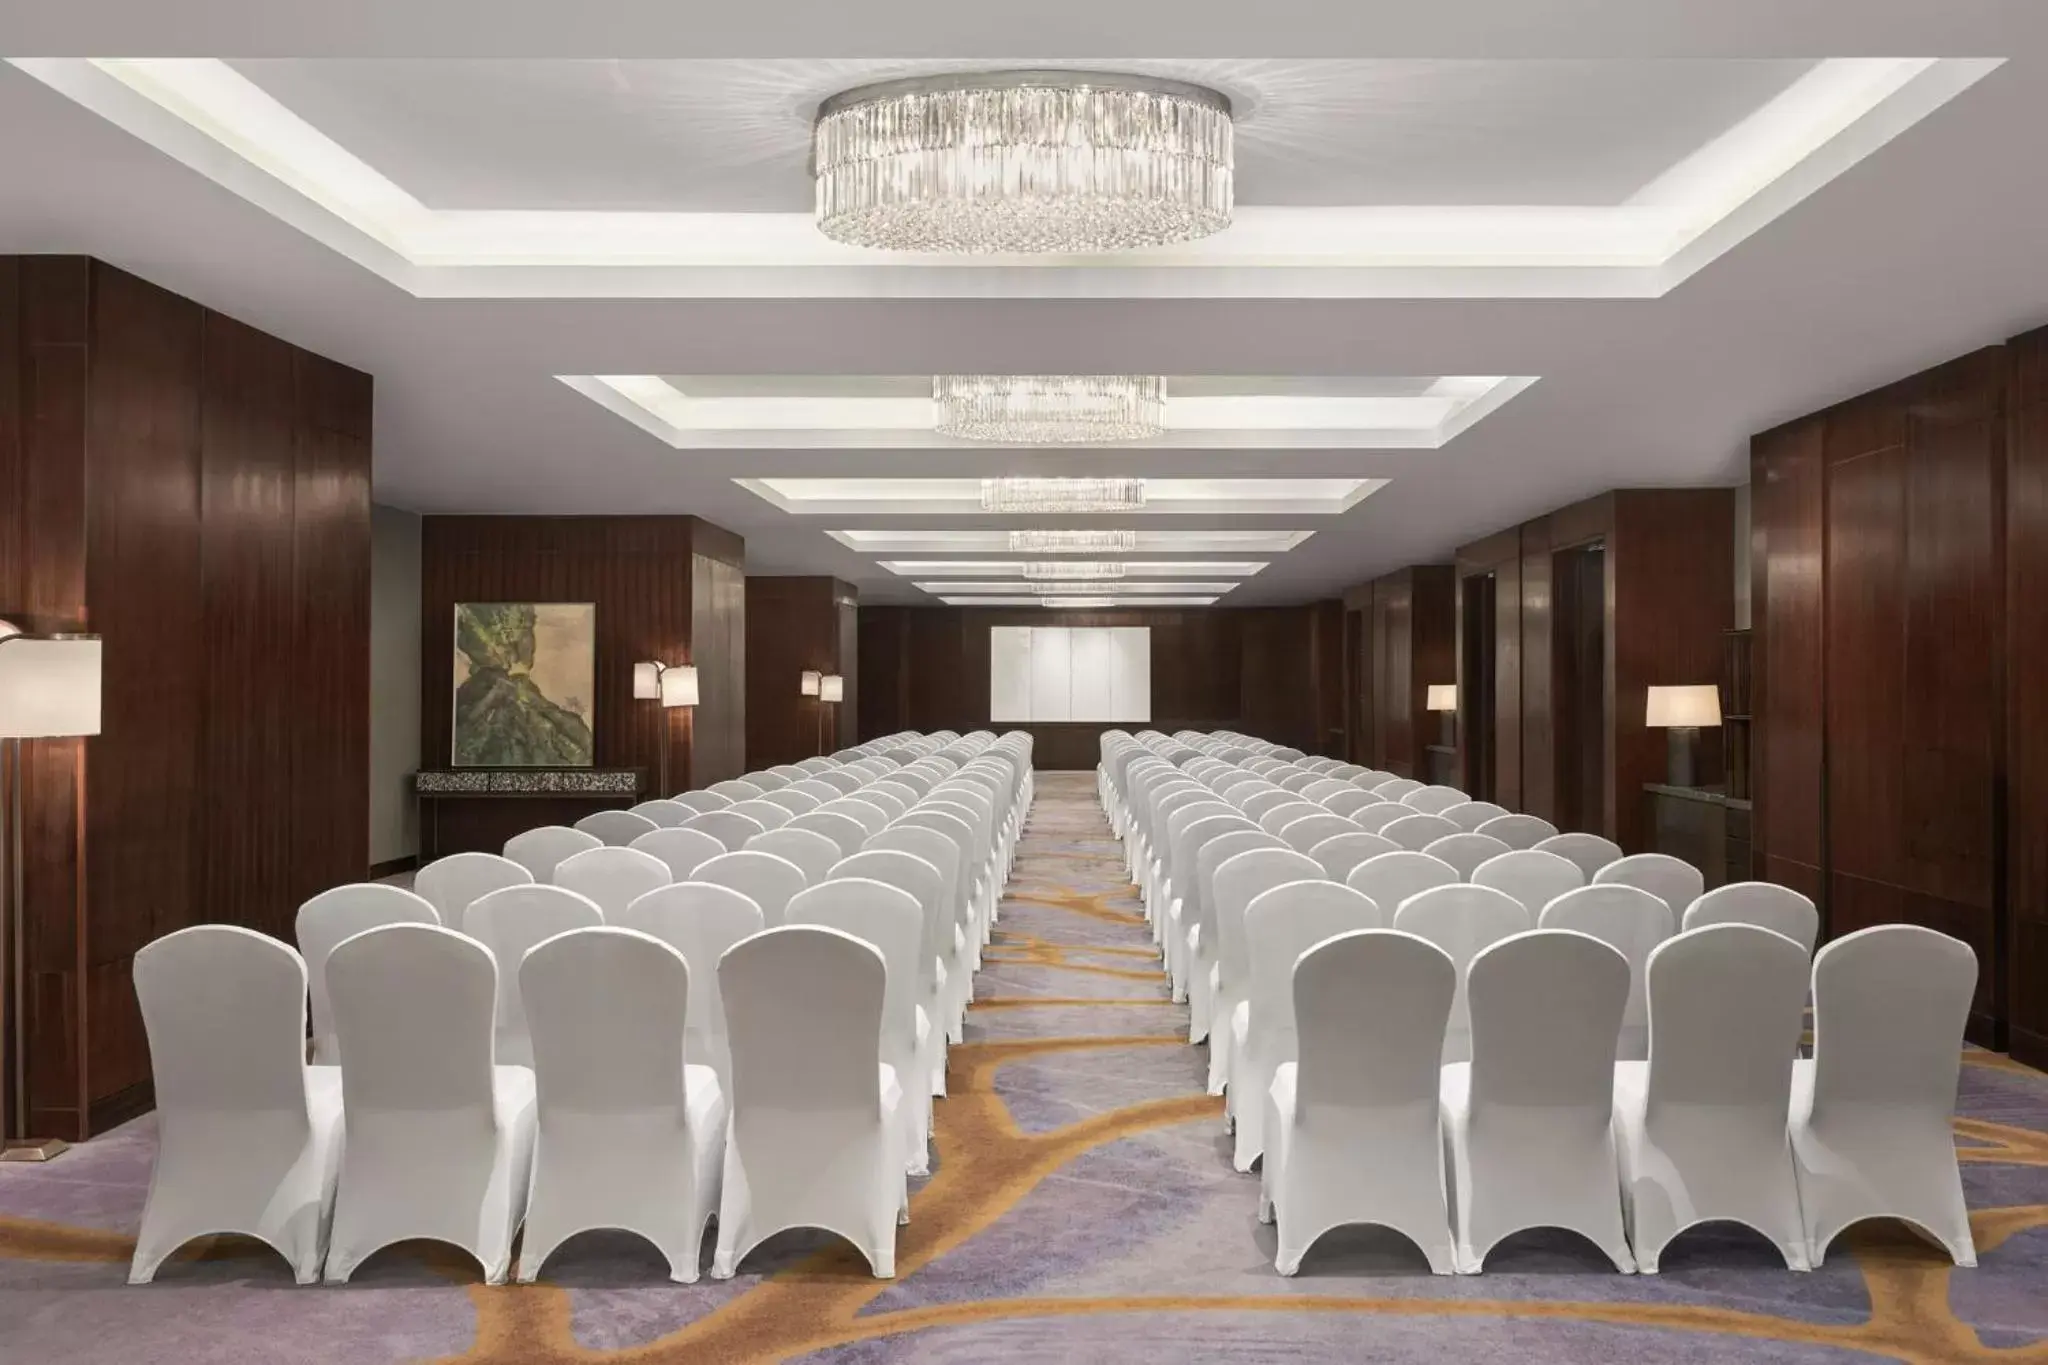 Meeting/conference room in InterContinental Hanoi Landmark72, an IHG Hotel